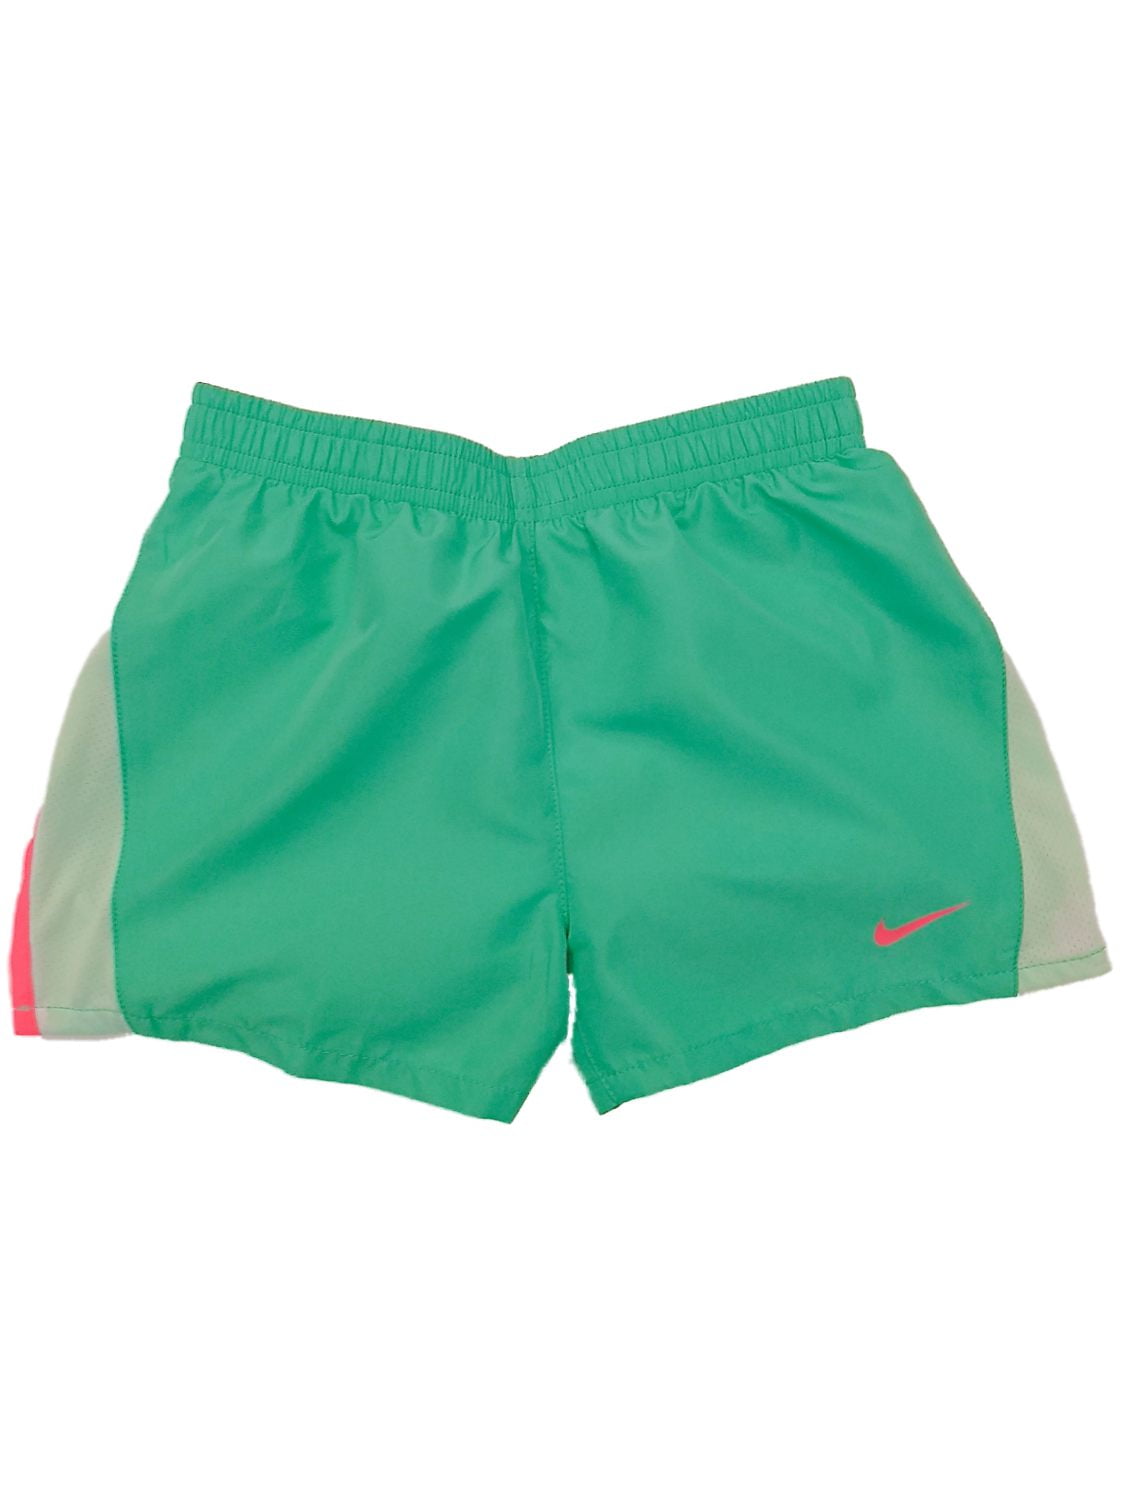 Nike Girl Running Shorts ~ Black & Neon Colors ~ DRI-FIT ~